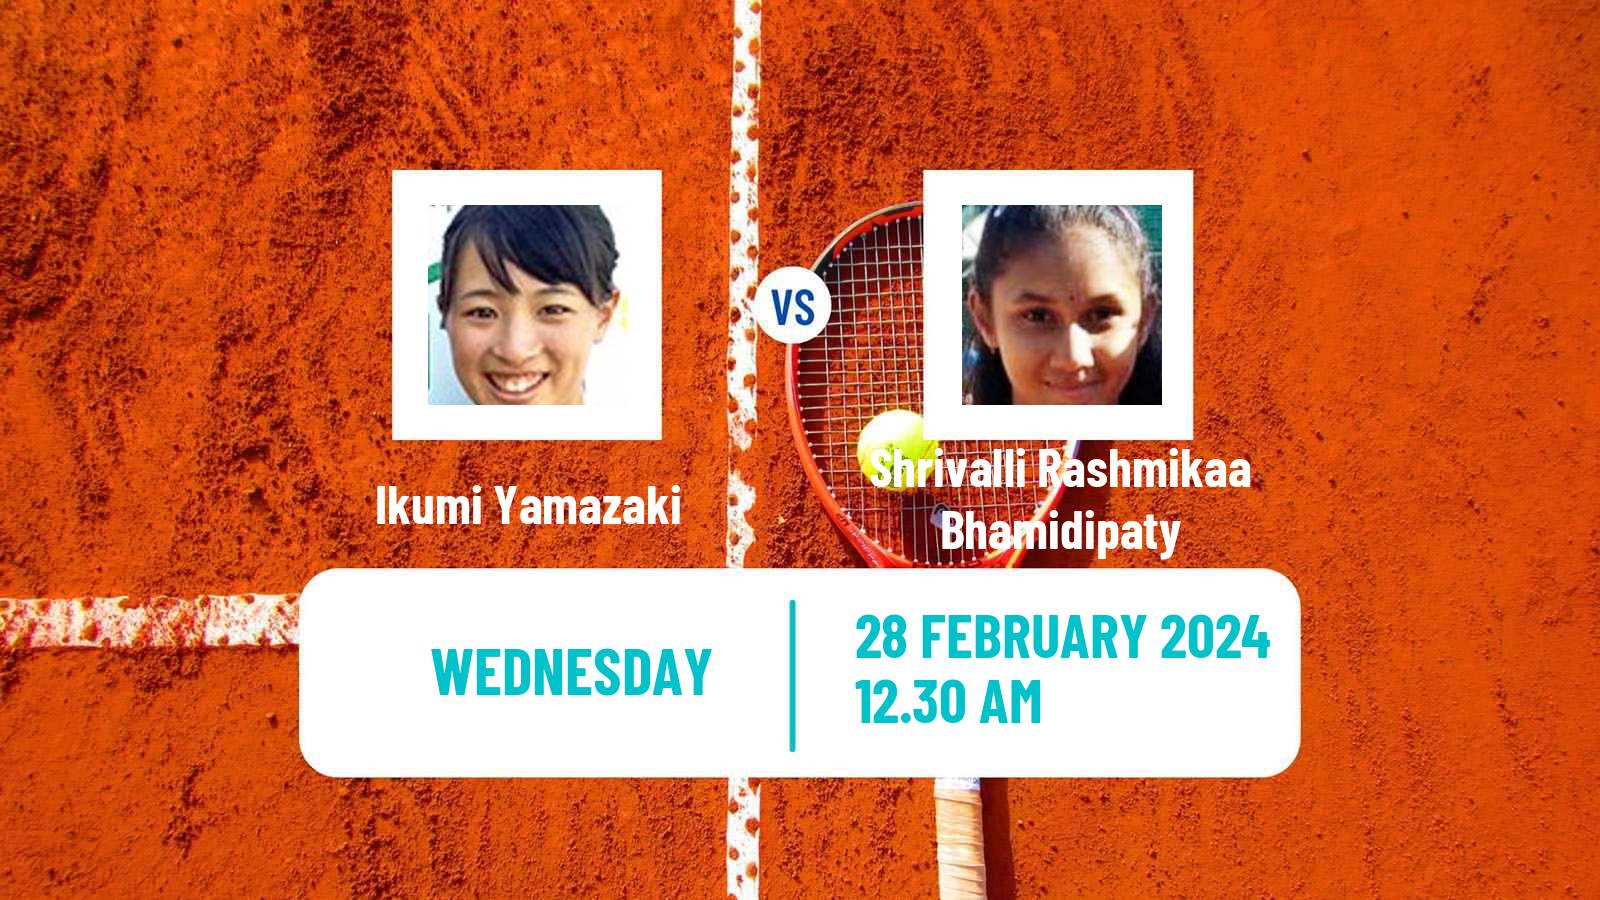 Tennis ITF W35 Gurugram Women Ikumi Yamazaki - Shrivalli Rashmikaa Bhamidipaty